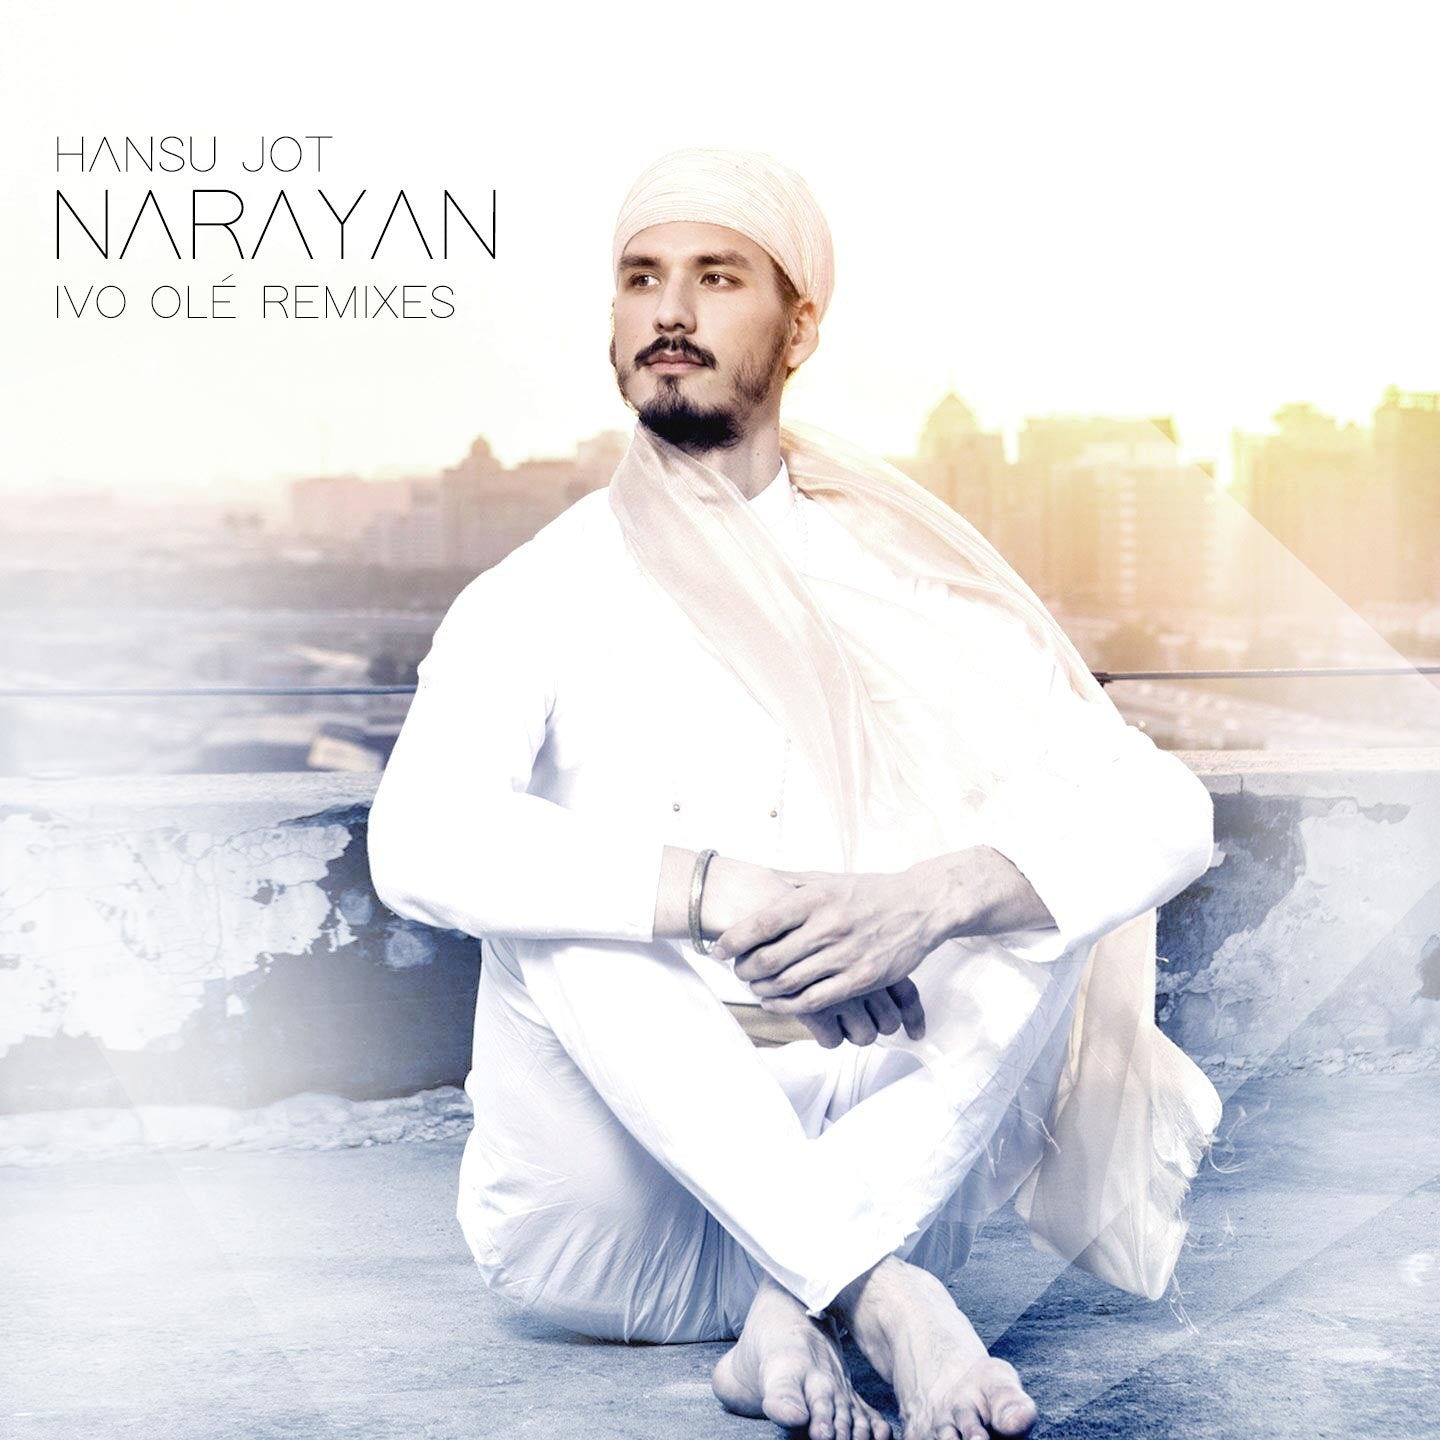 Narayan Ecstatic Dance Radio Remix- Hansu Jot